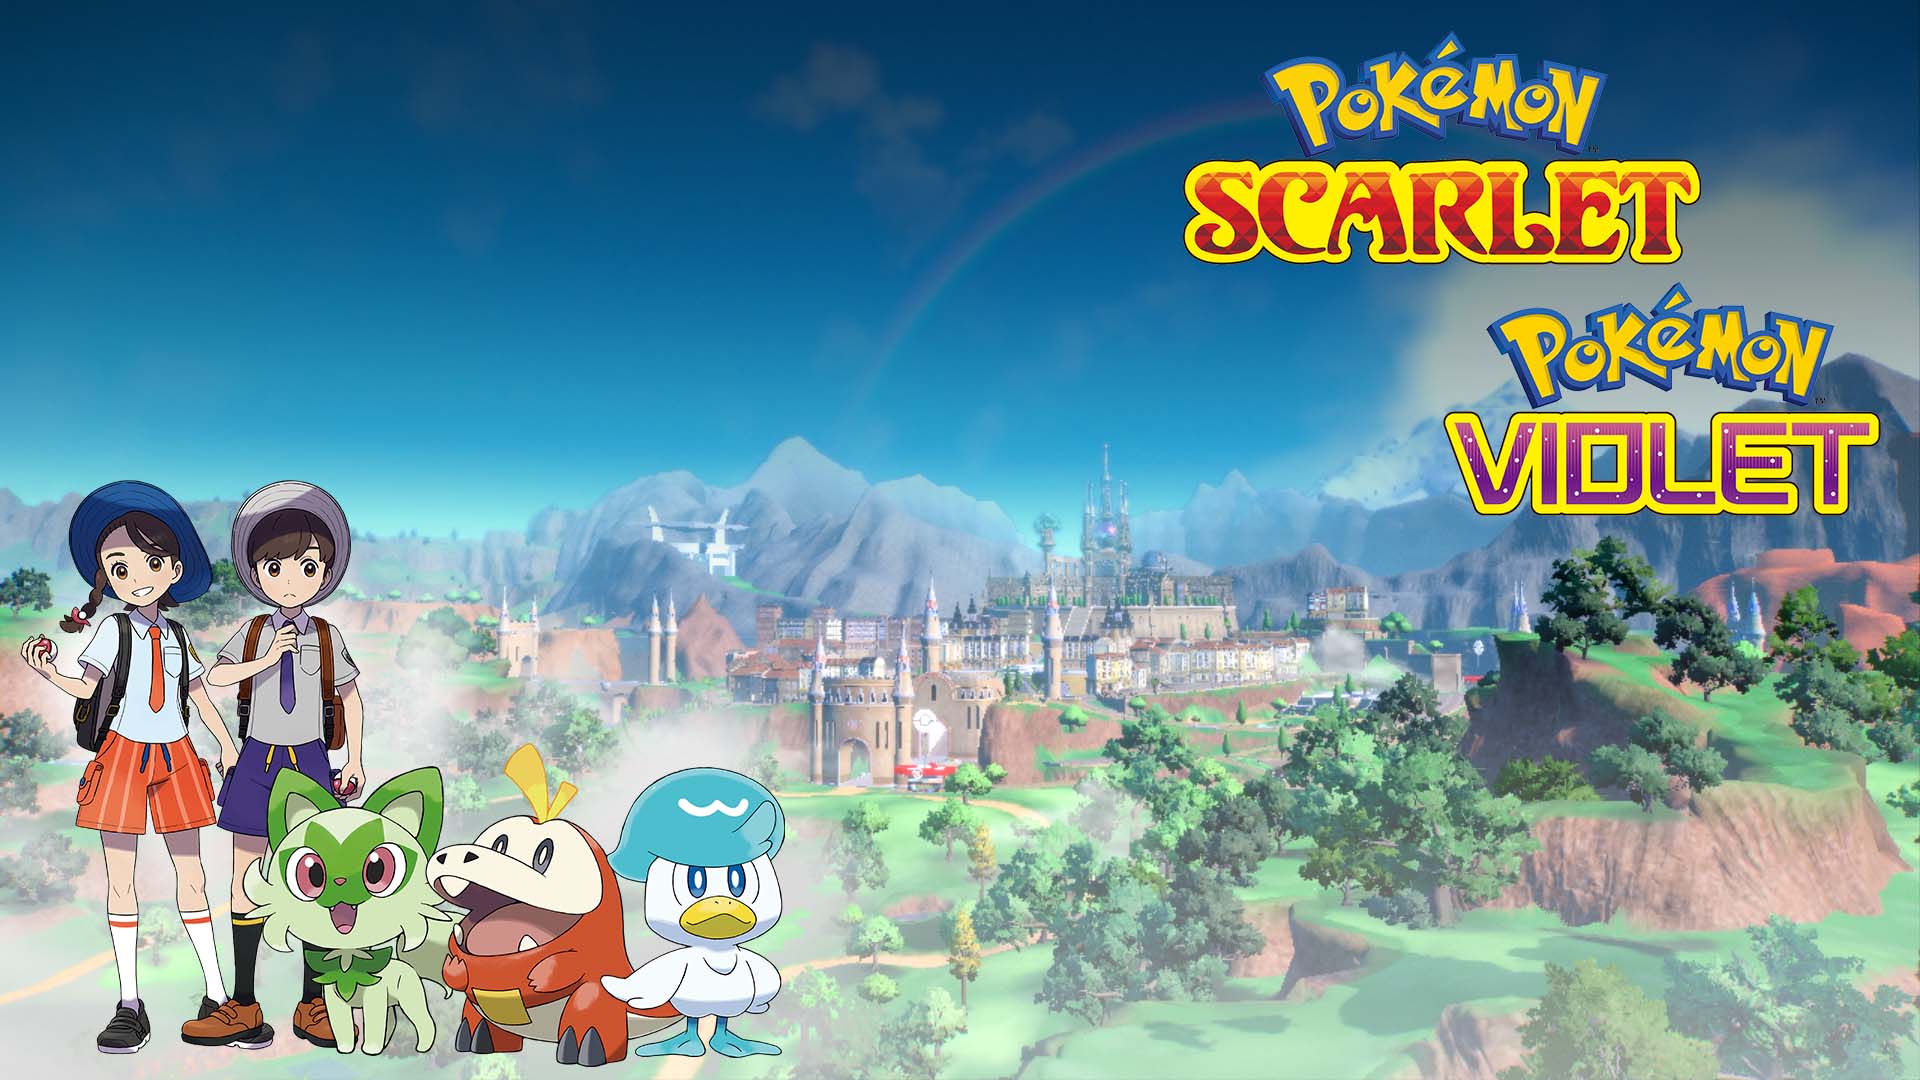 Pokémon Day 2022: Generation IX games Pokémon Scarlet & Violet announced for 2022 release. Pokécharms